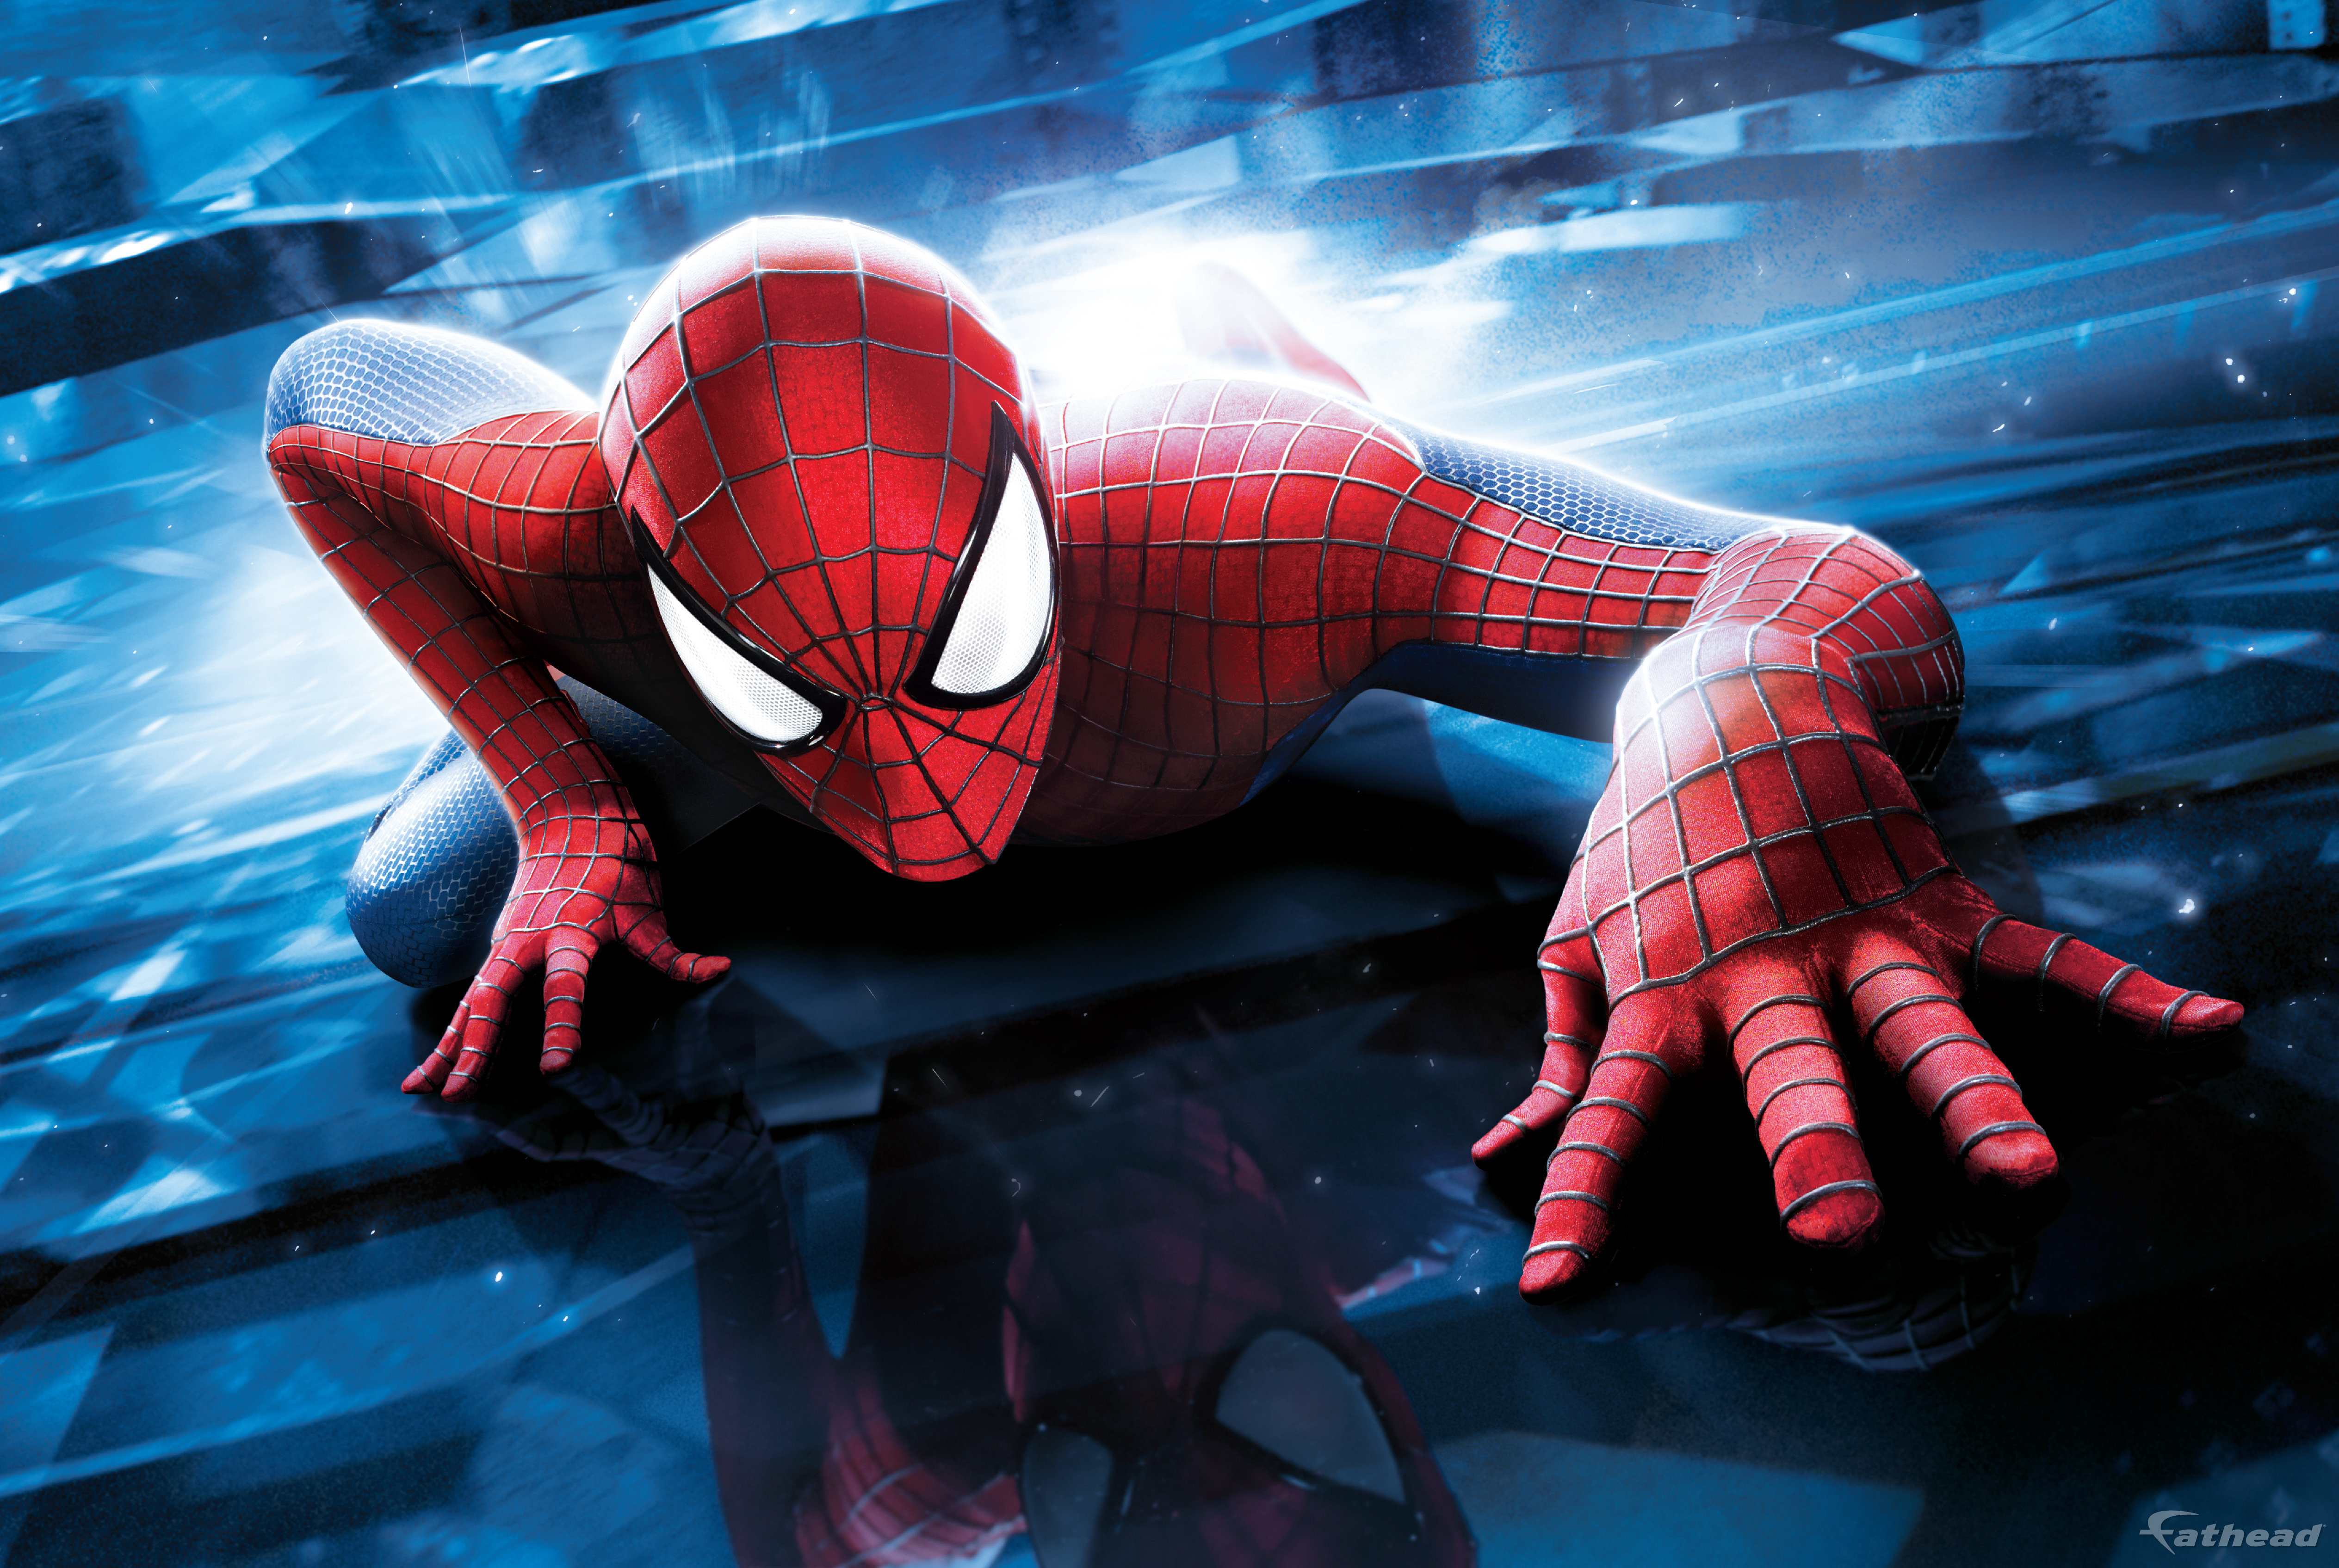 600+ 4K Spider-Man Fondos de pantalla | Fondos de Escritorio